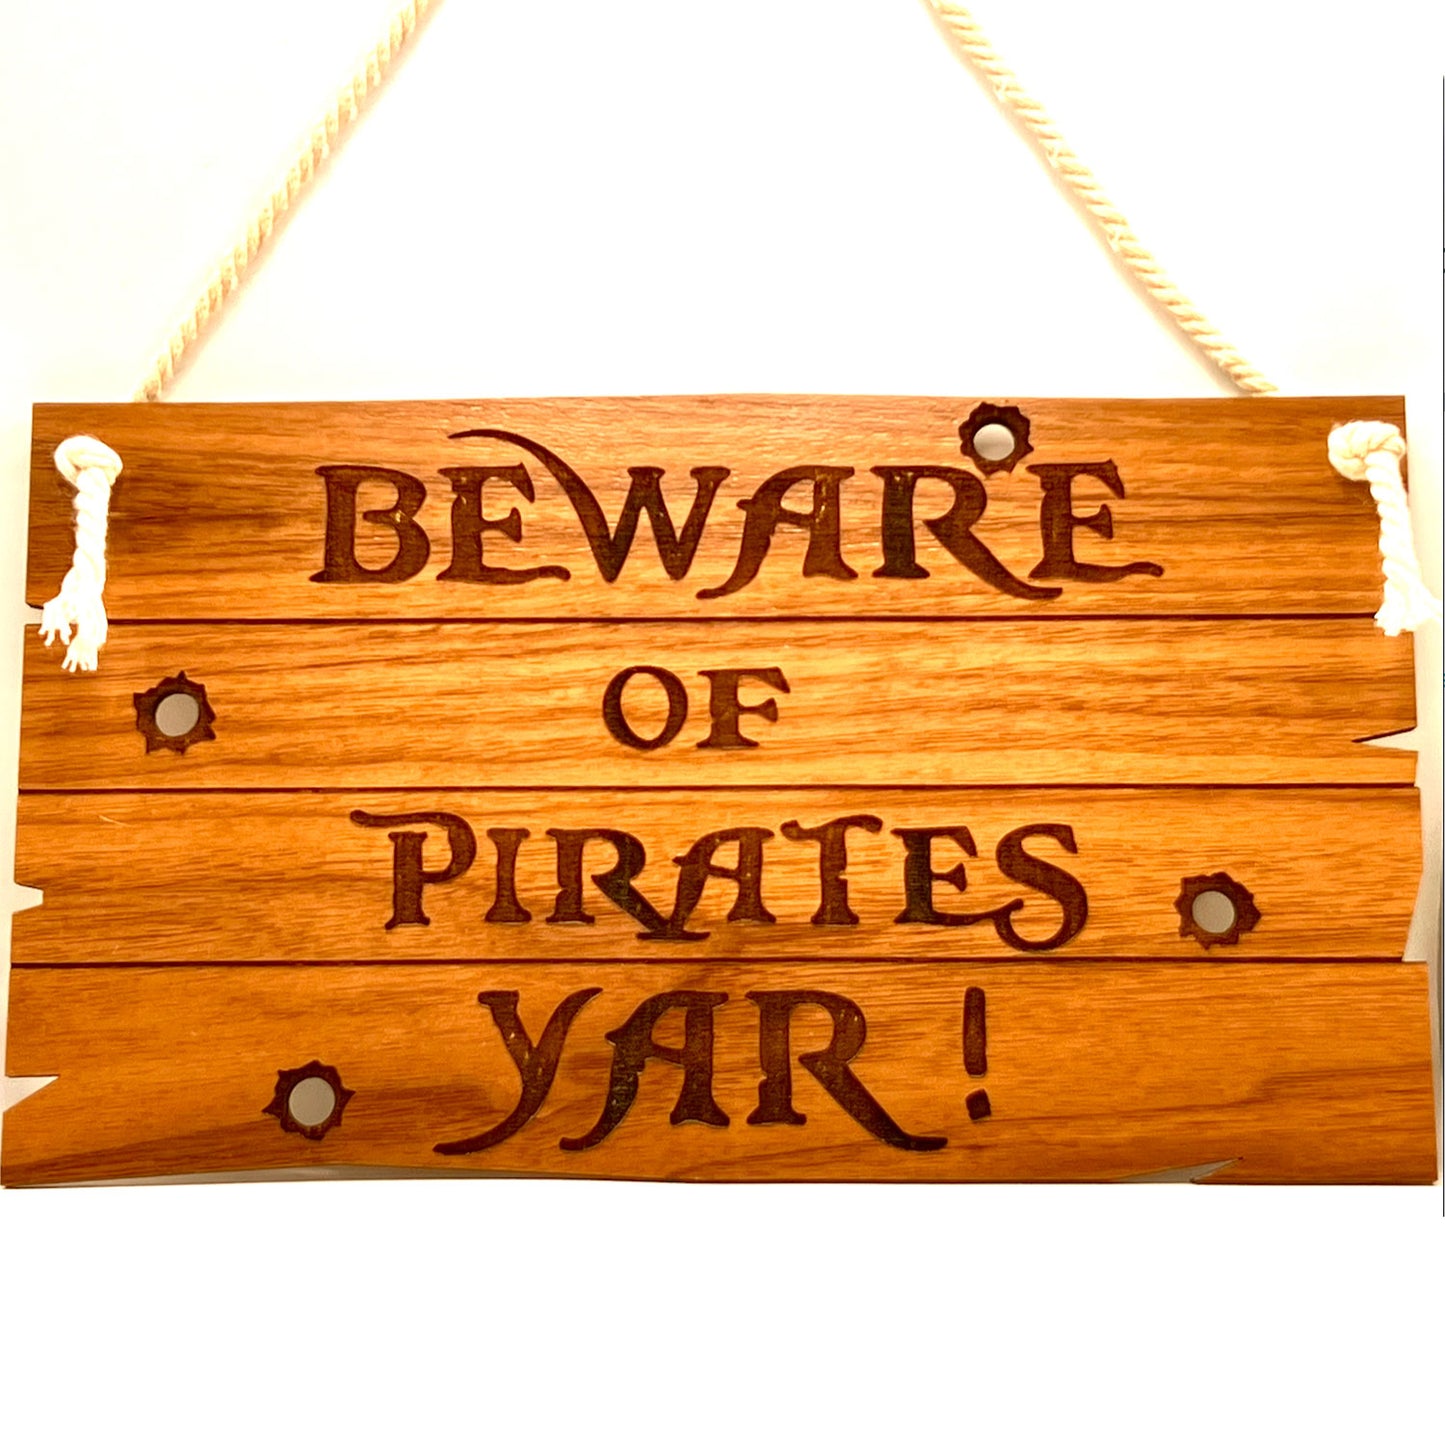 Beware of Pirates - Yar!  Sign